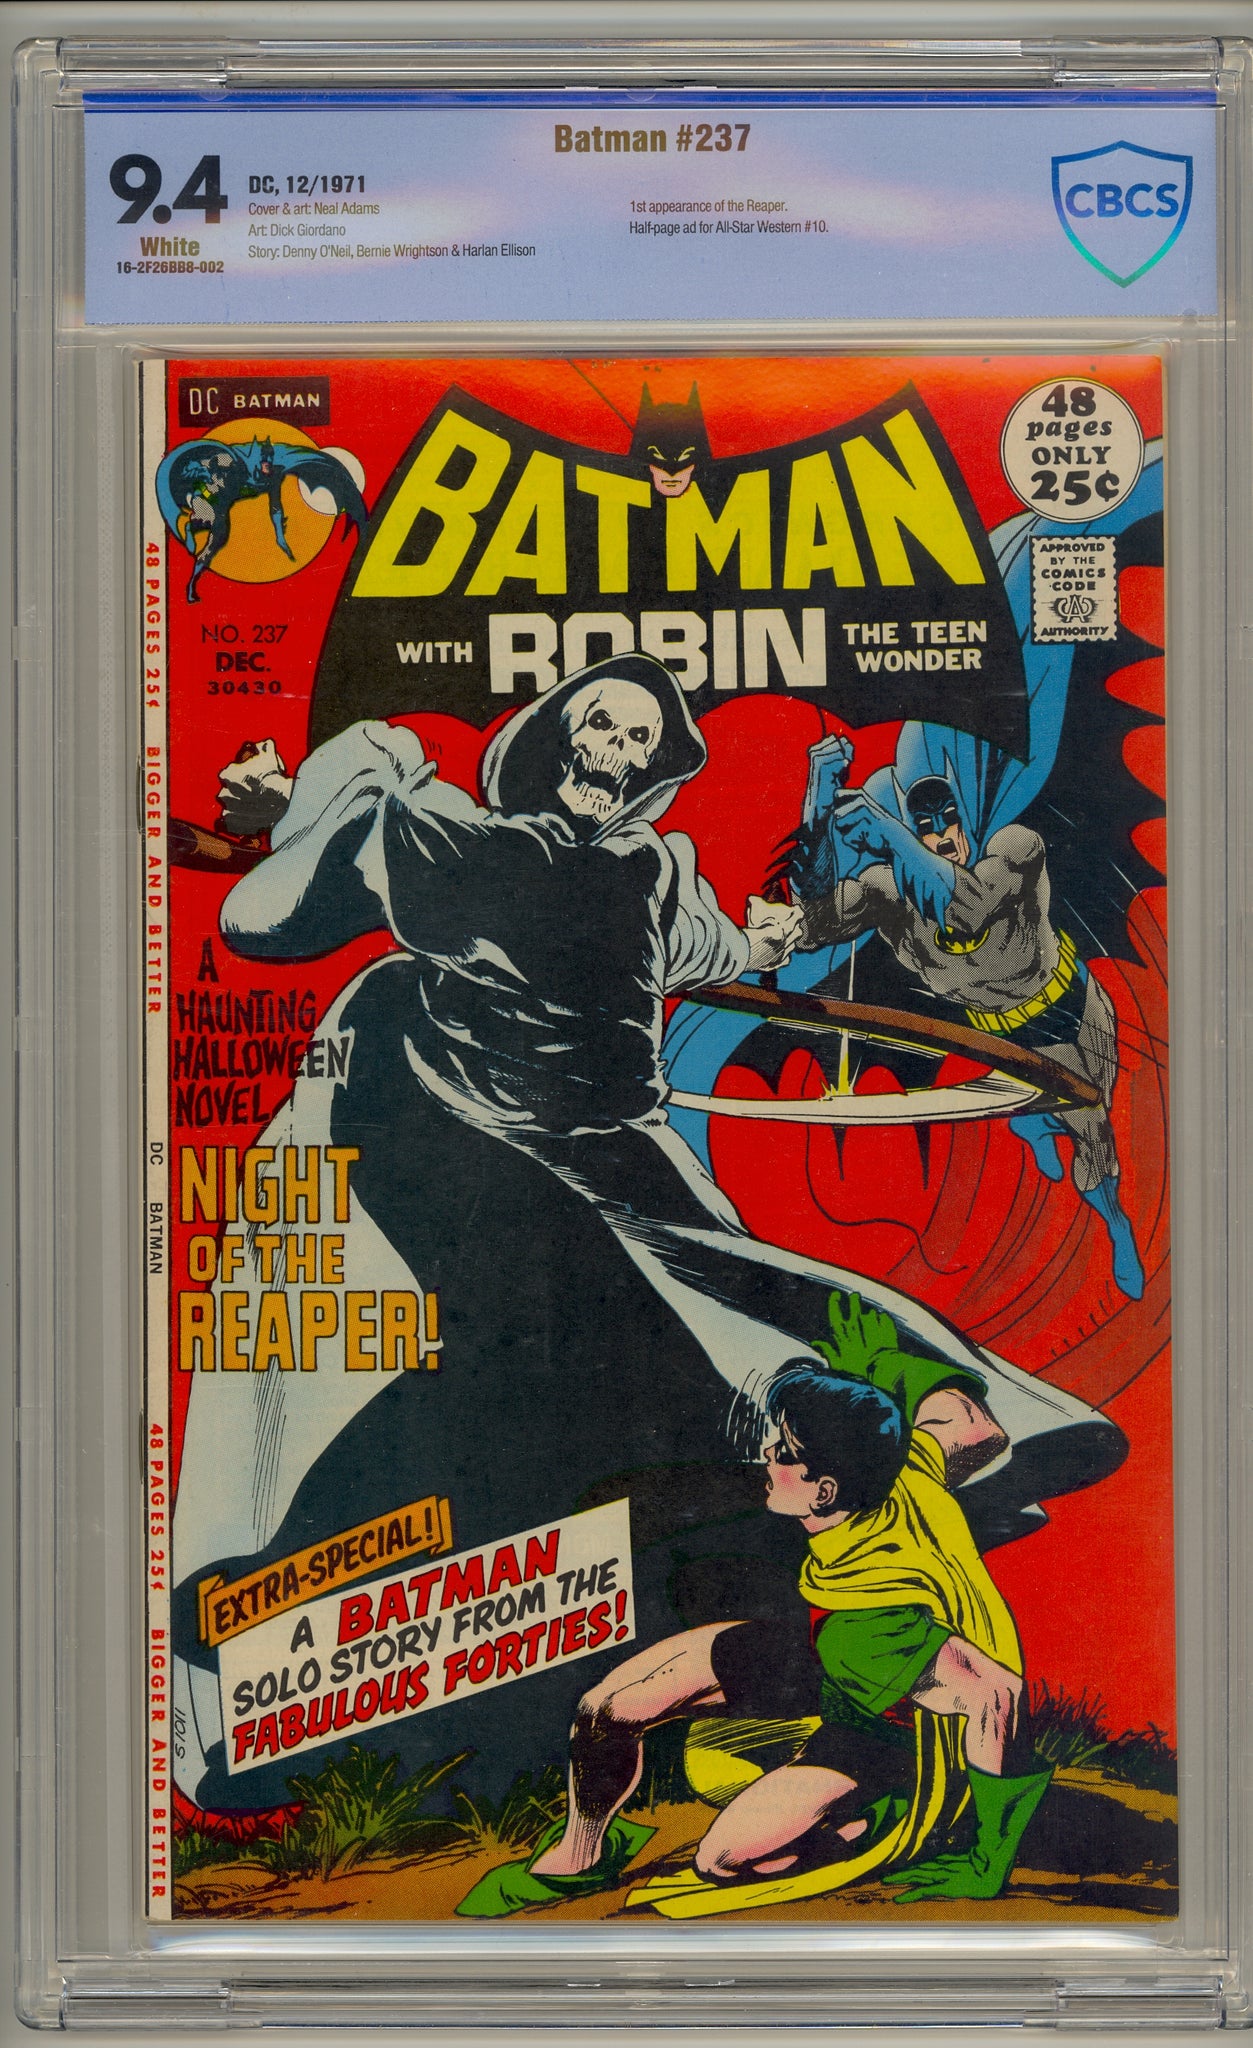 Batman #237 (1971) Reaper